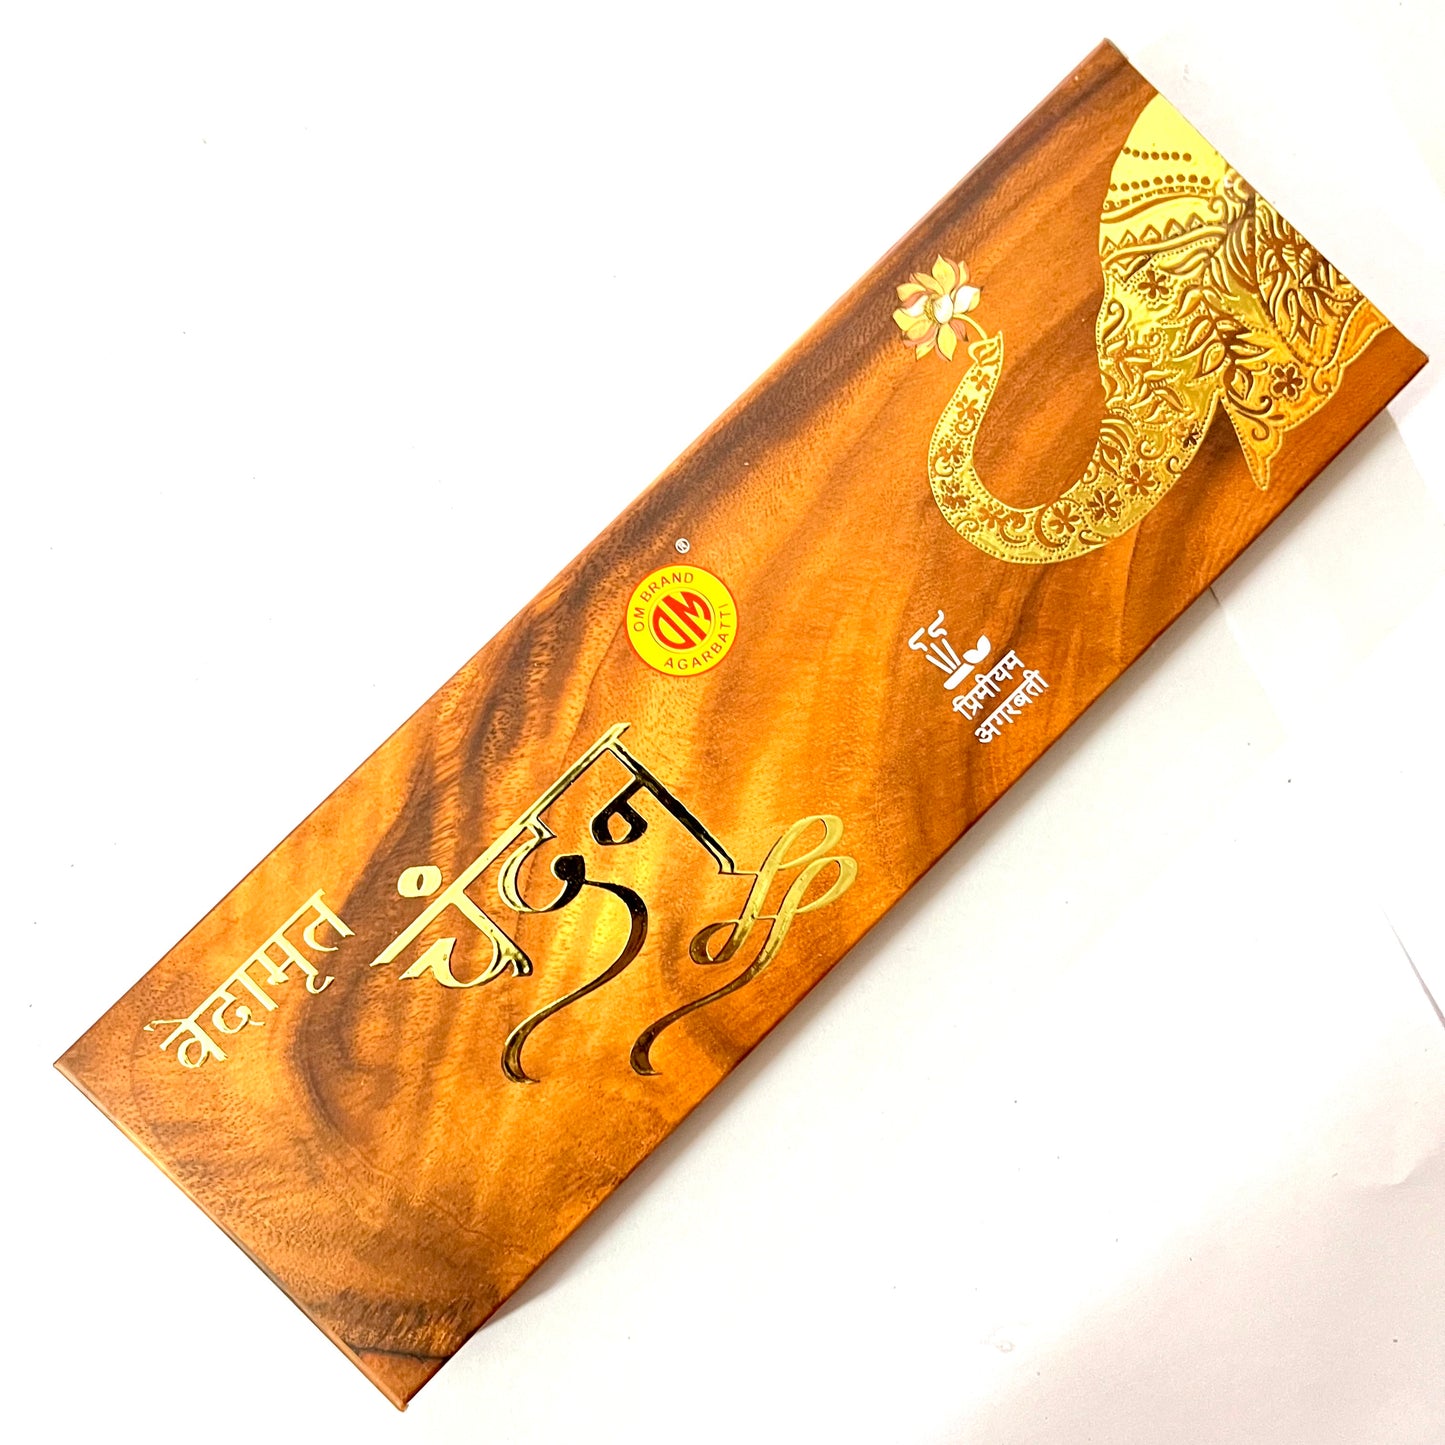 Om Brand Vedamrut CHANDAN Premium Incense Sticks (50 gms)